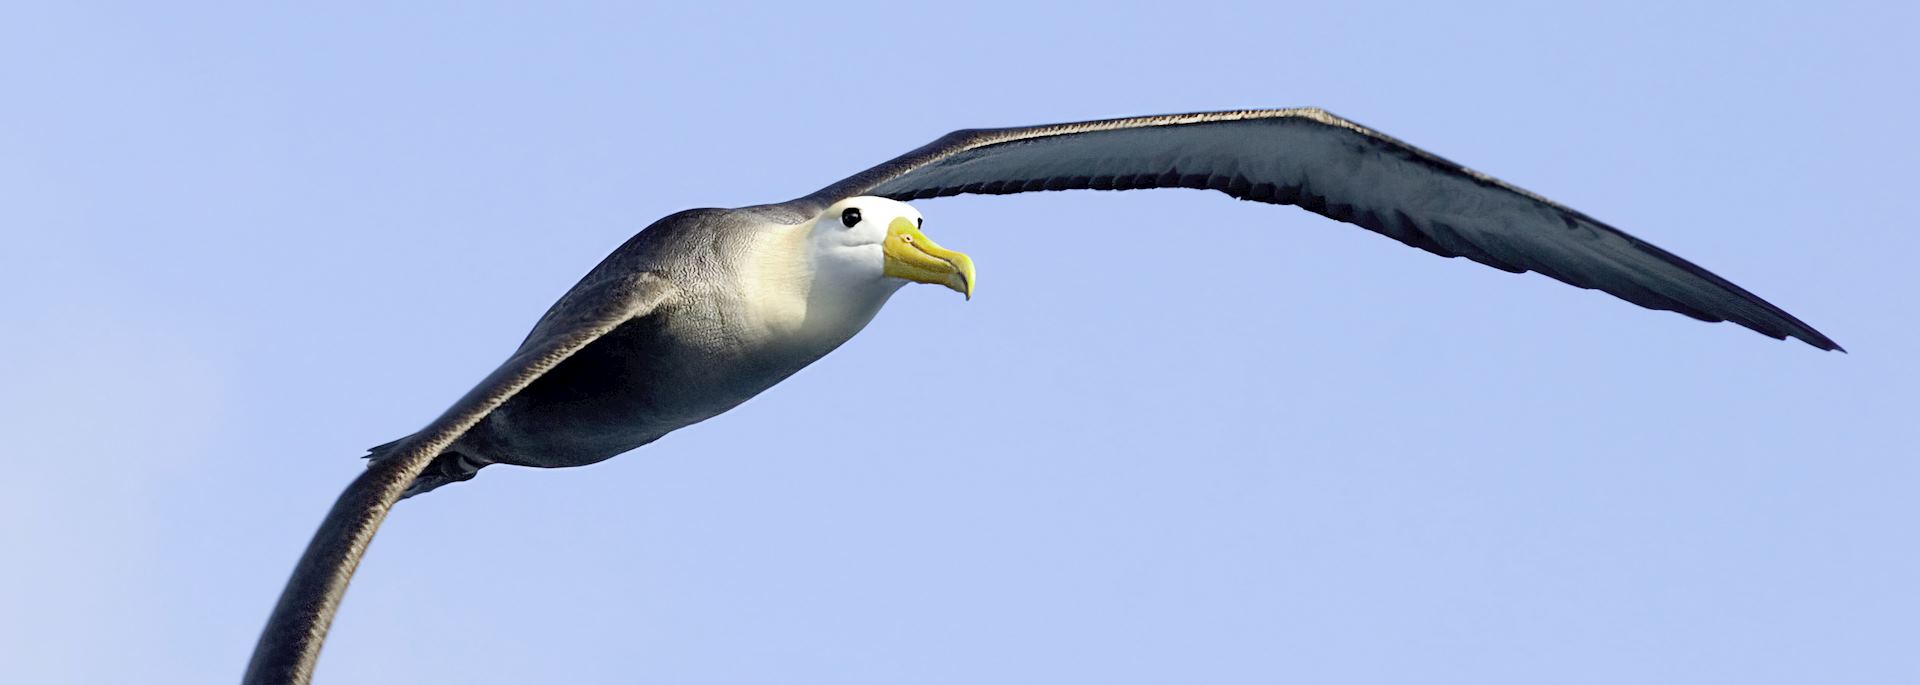 Albatros, the Galapagos islands